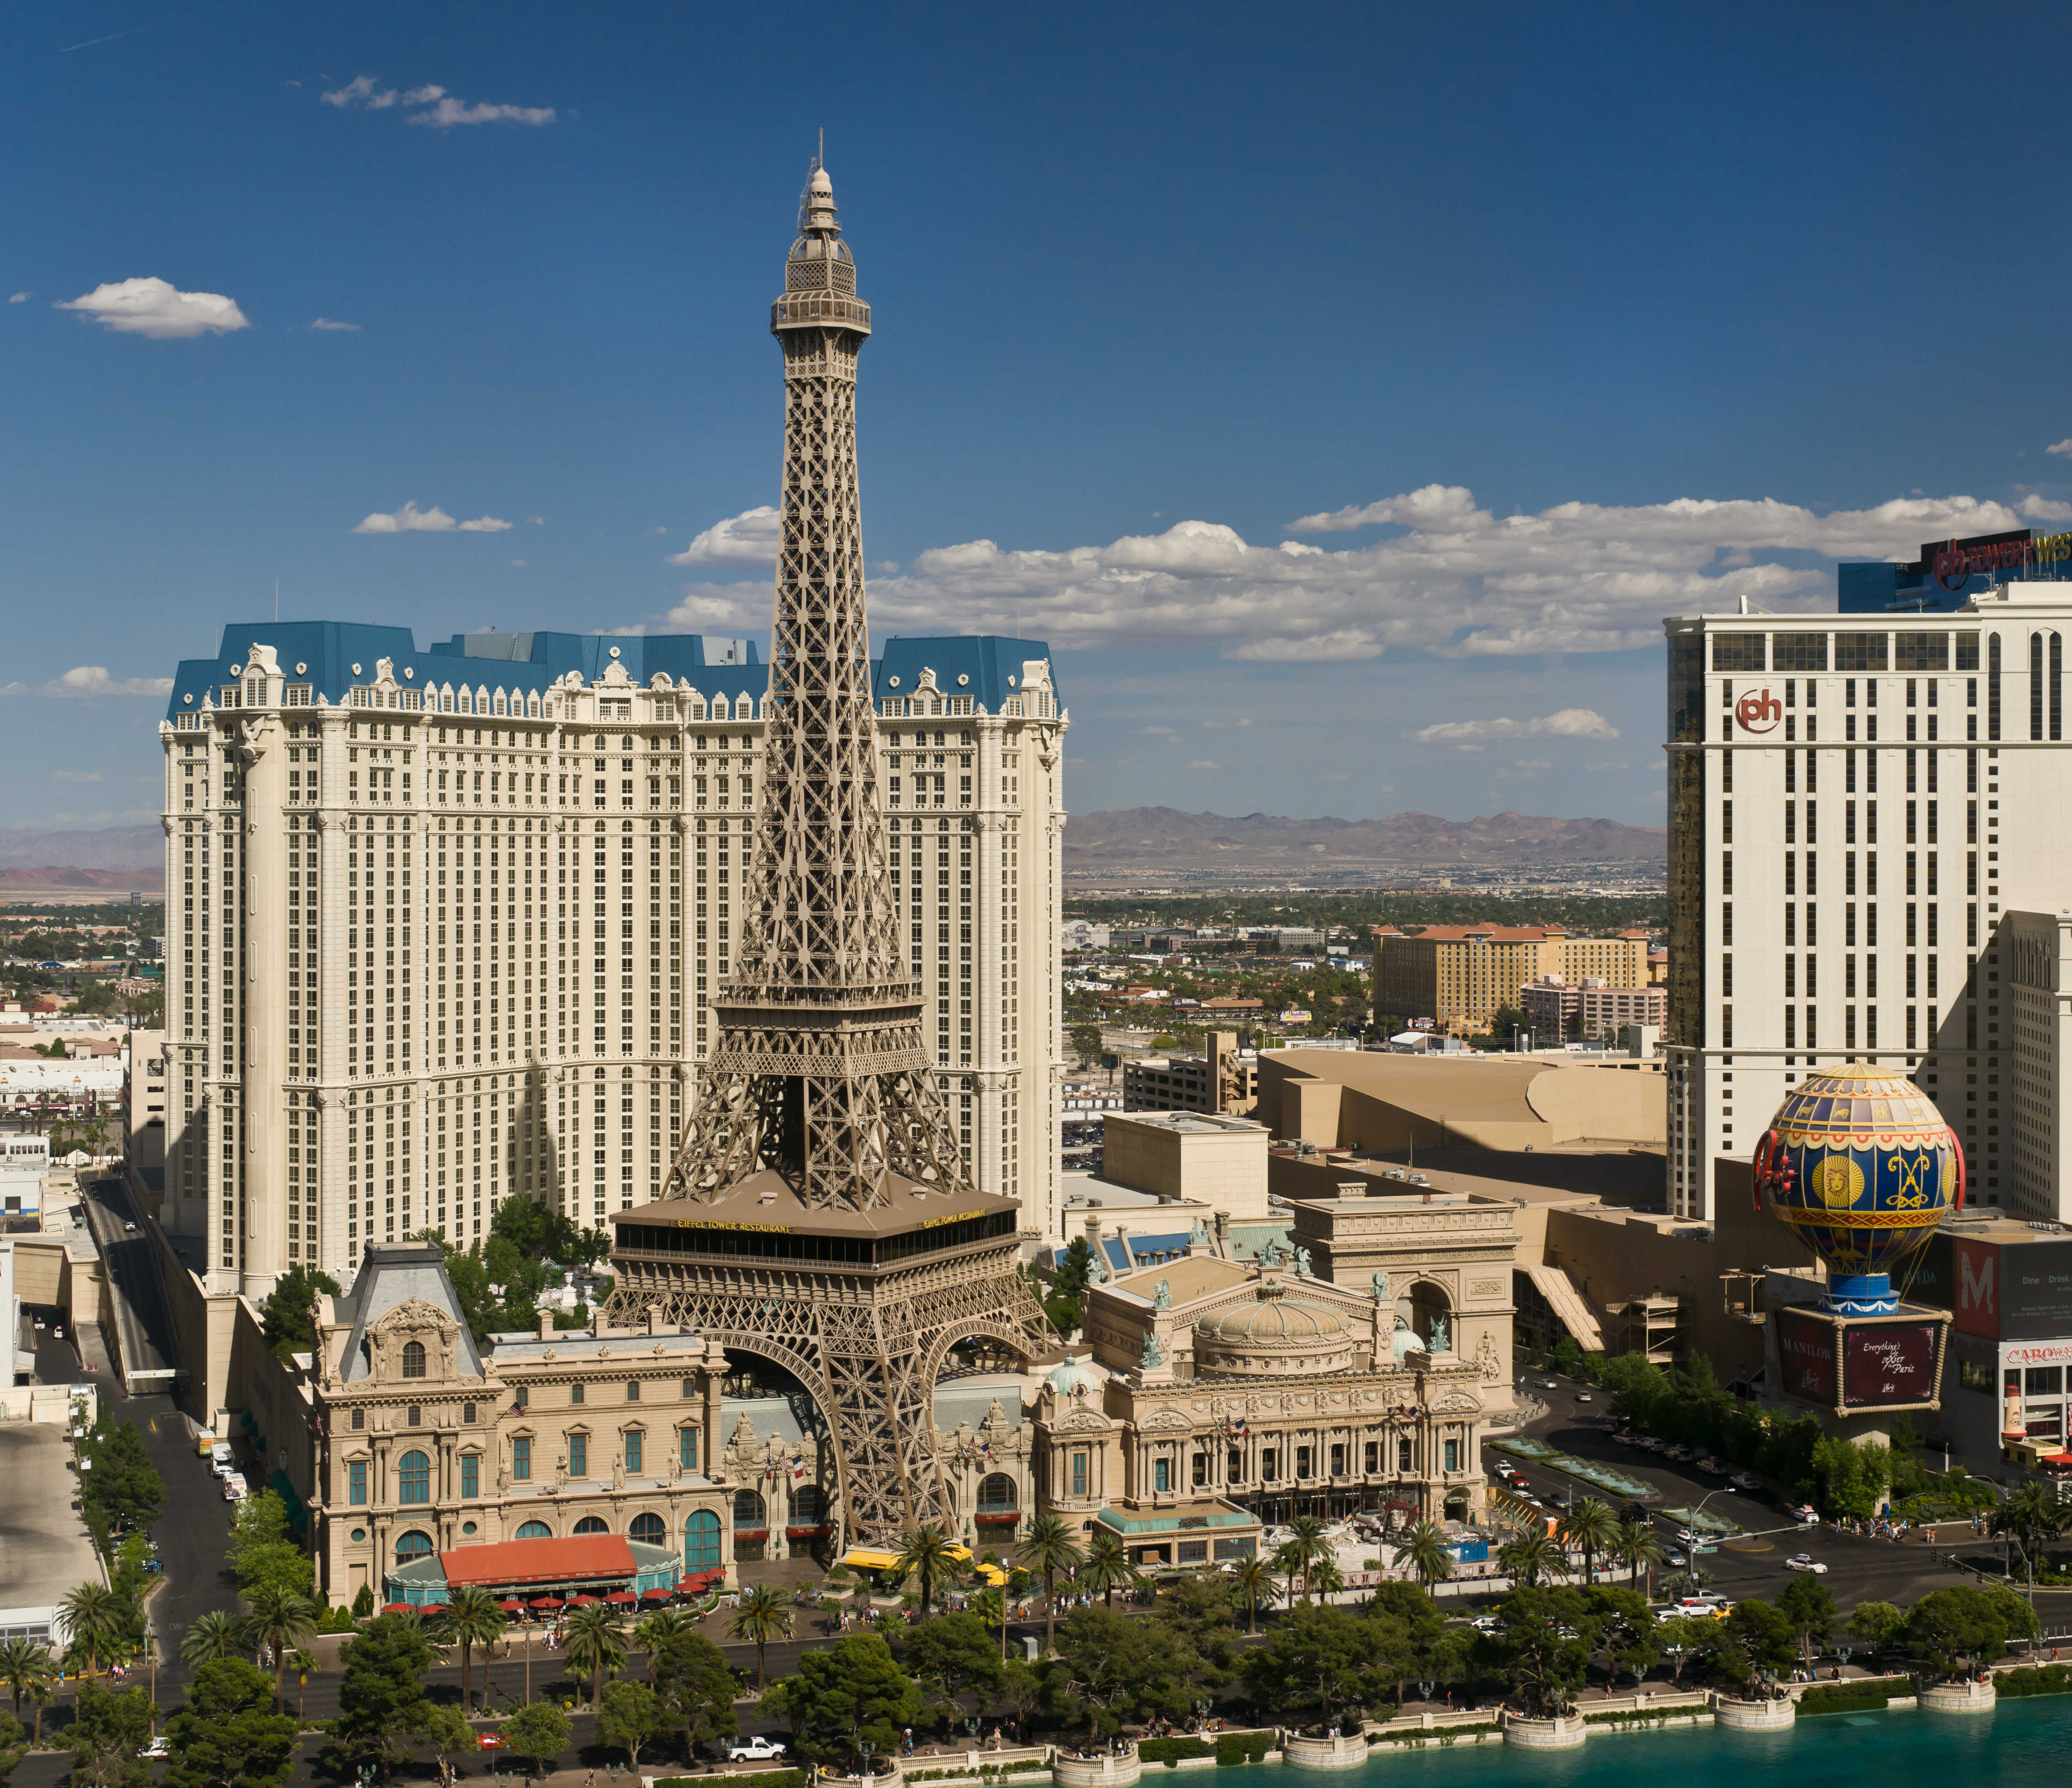 Paris Las Vegas – Network in Vegas